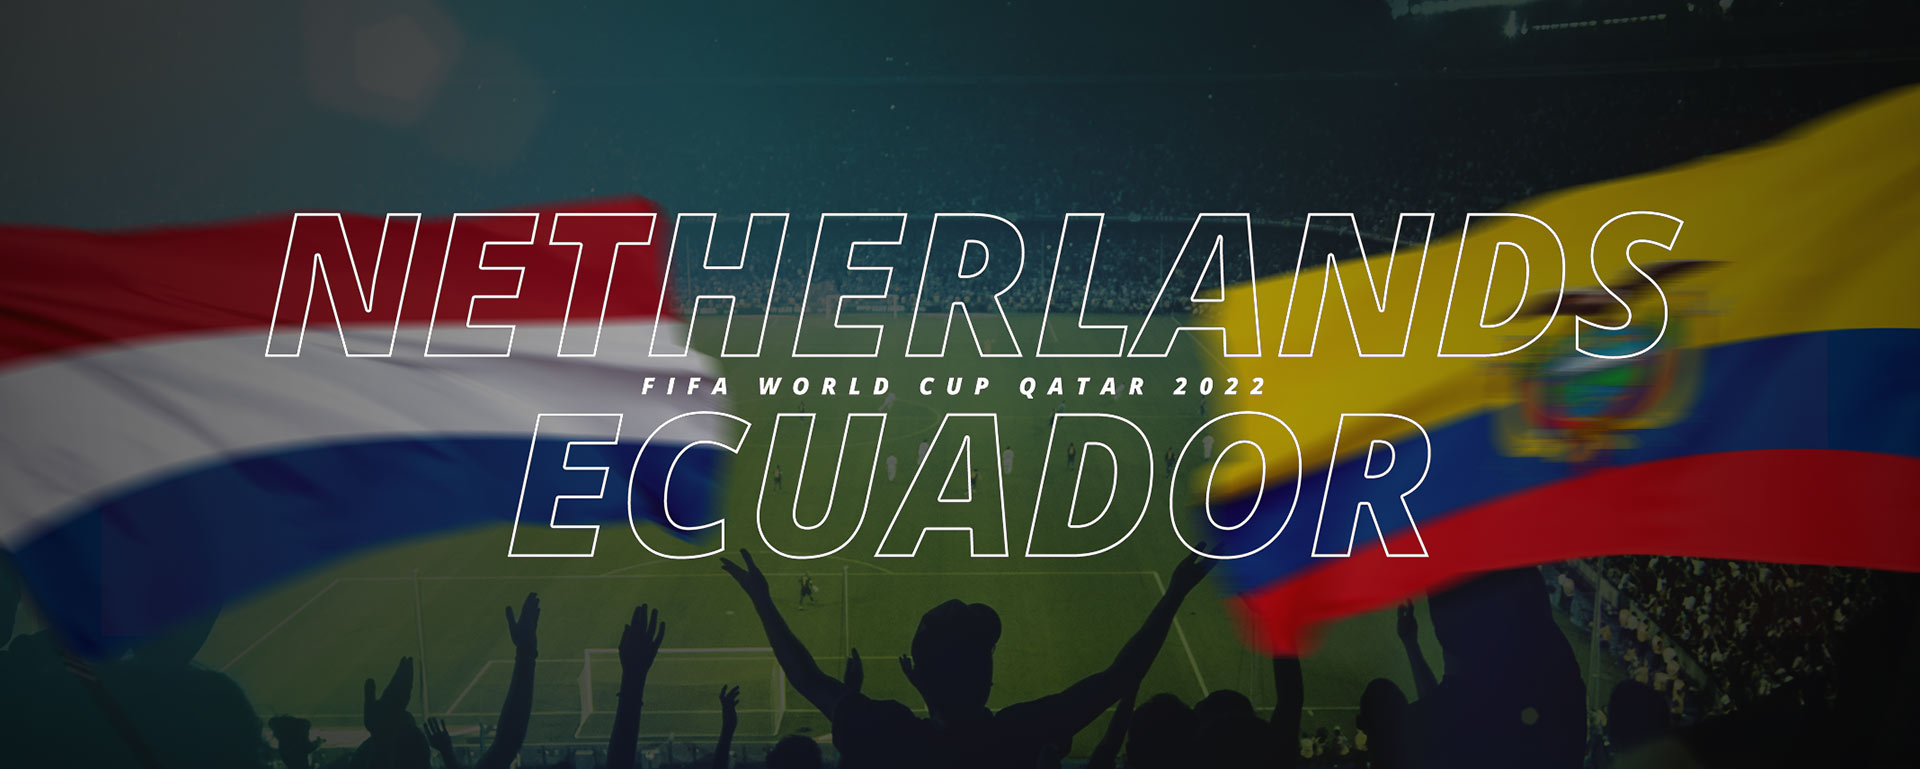 NETHERLANDS VS ECUADOR | FIFA WORLD CUP QATAR 2022